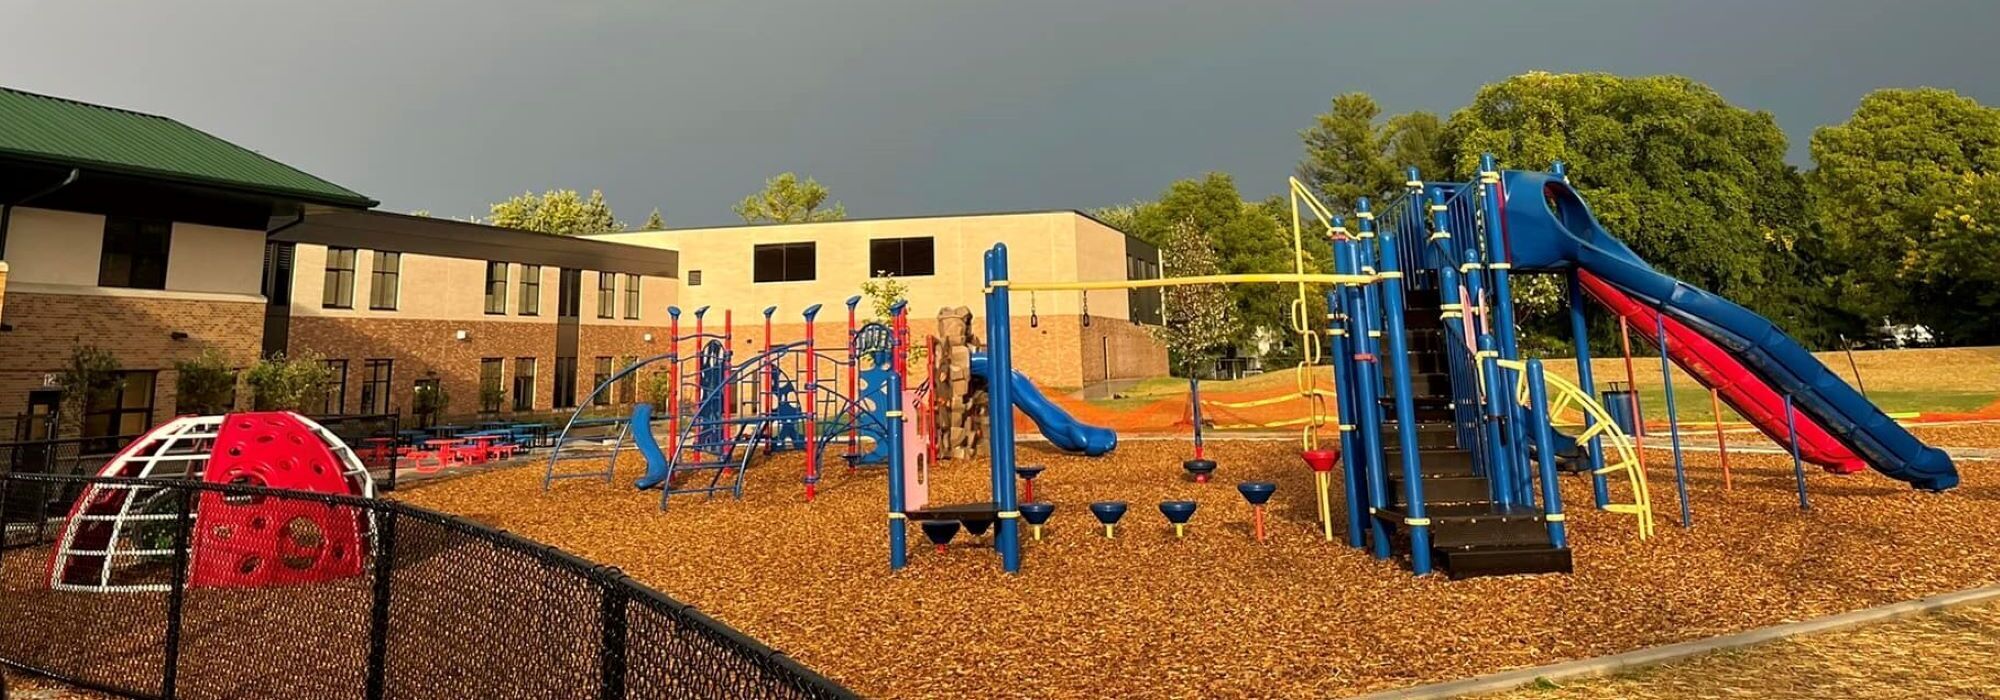 Steele Elementary playground